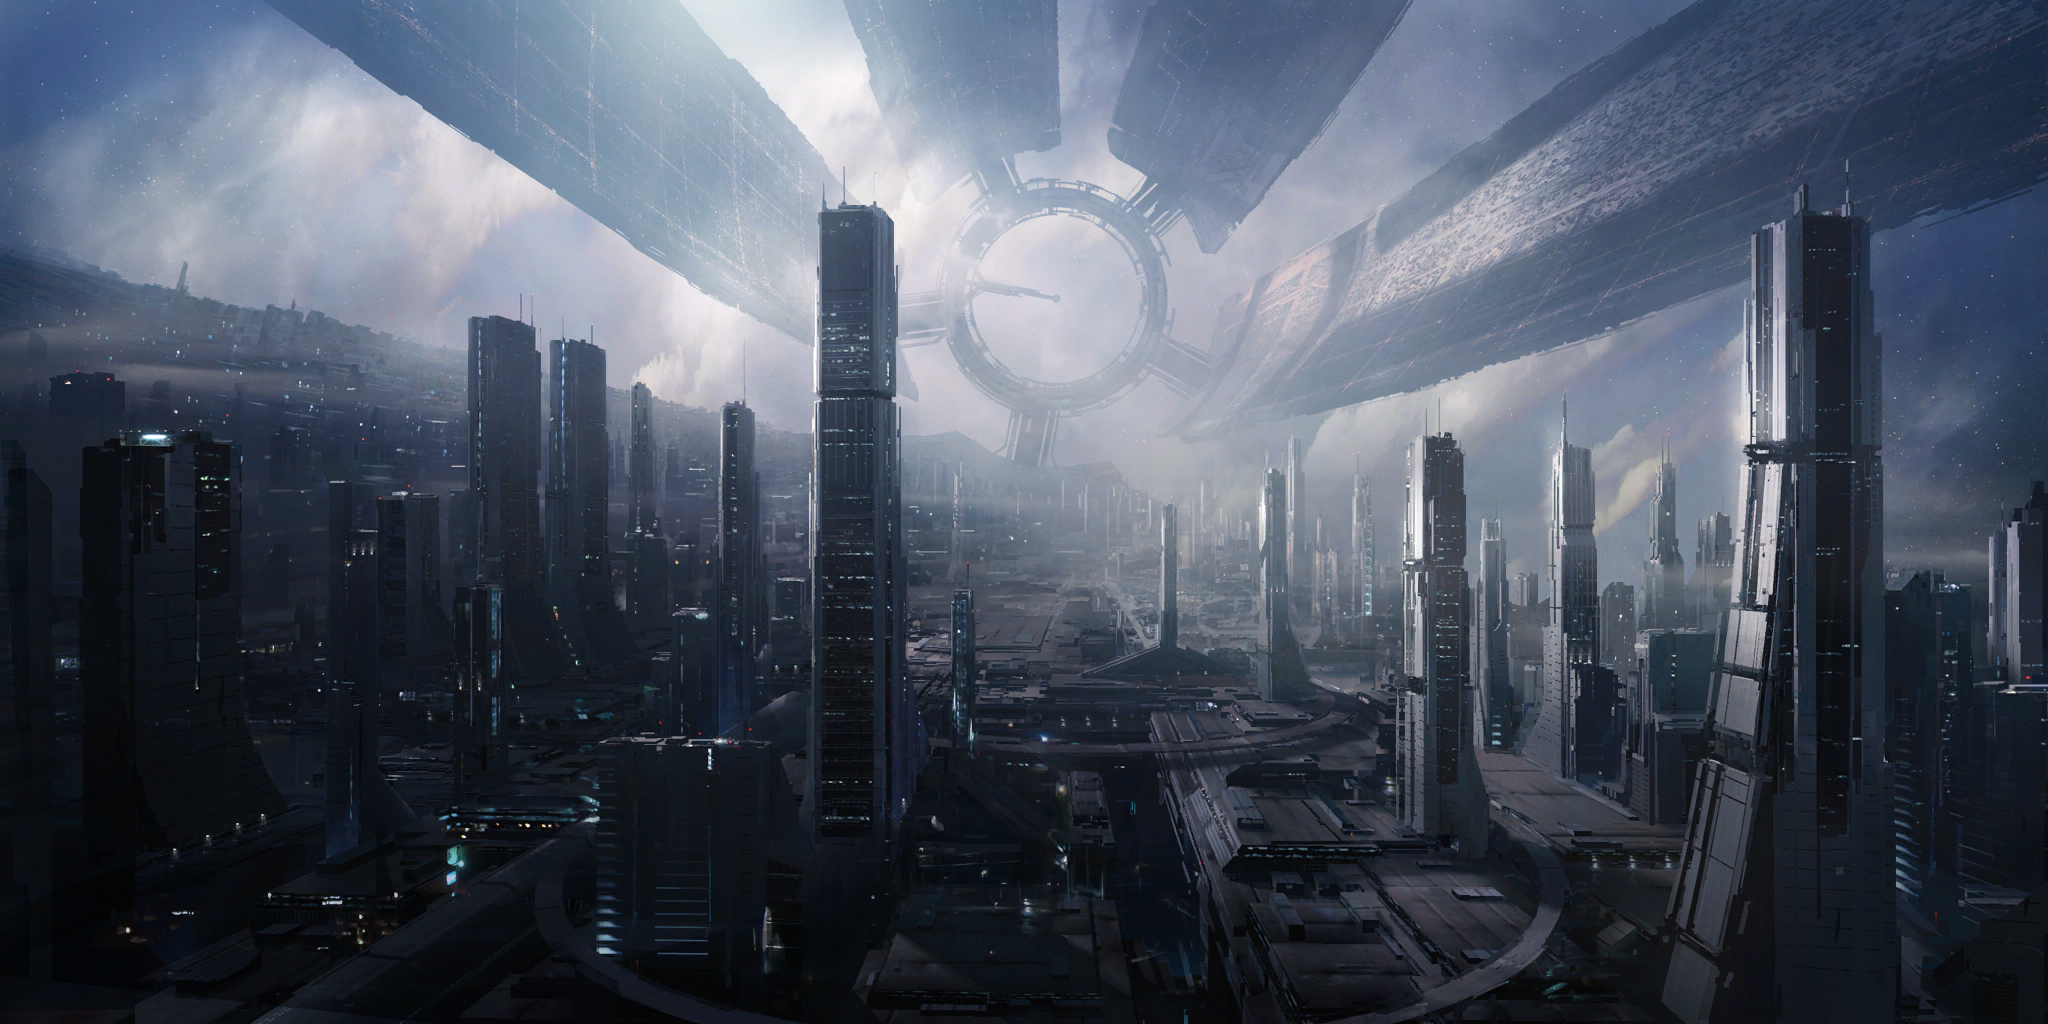 401 Mass Effect HD Wallpapers | Backgrounds - Wallpaper Abyss